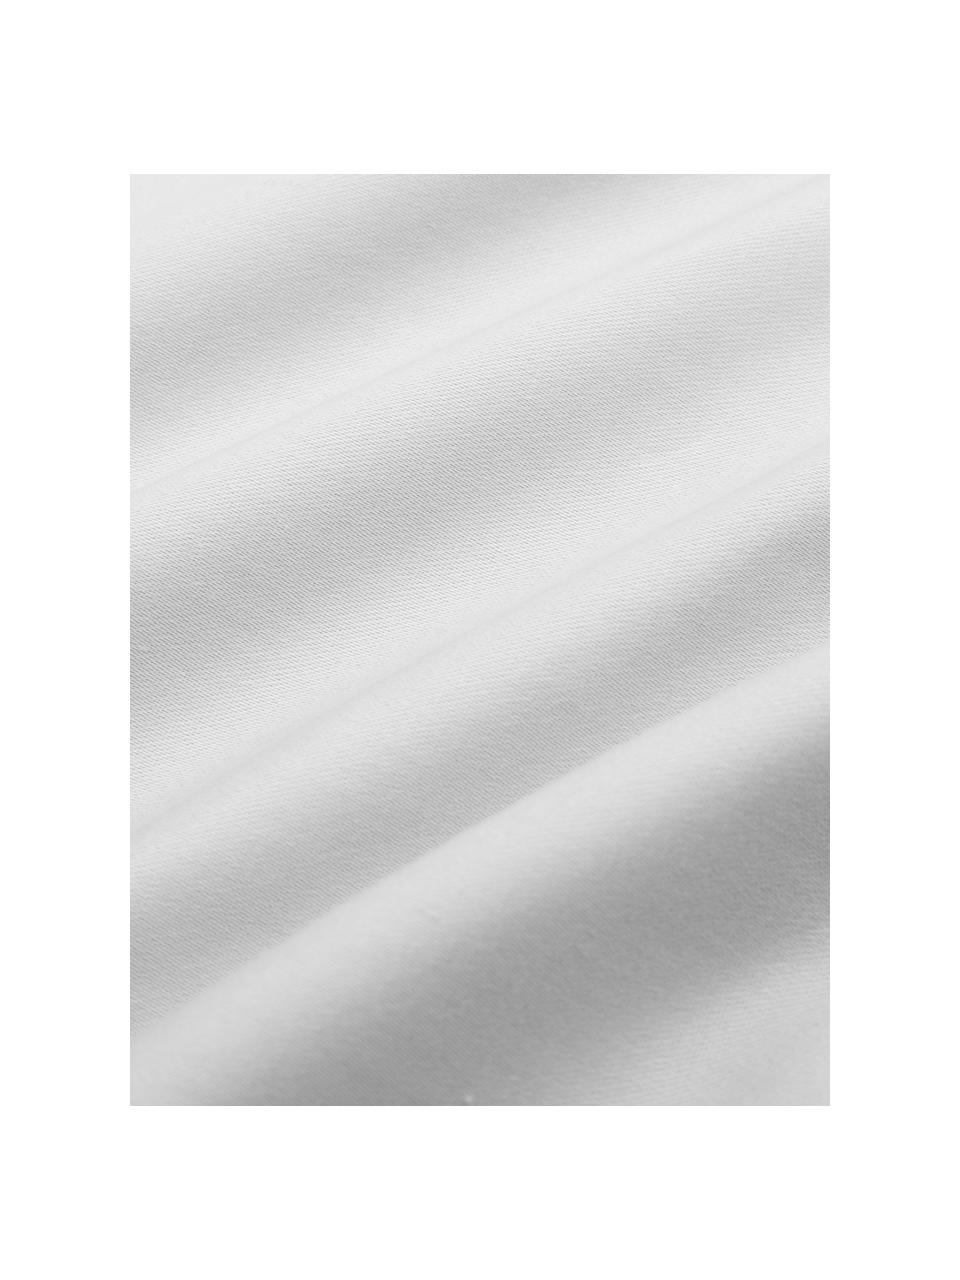 Baumwollsatin-Kissenbezug Premium in Hellgrau mit Stehsaum, 65 x 65 cm, Webart: Satin, leicht glänzend Fa, Hellgrau, B 65 x L 65 cm